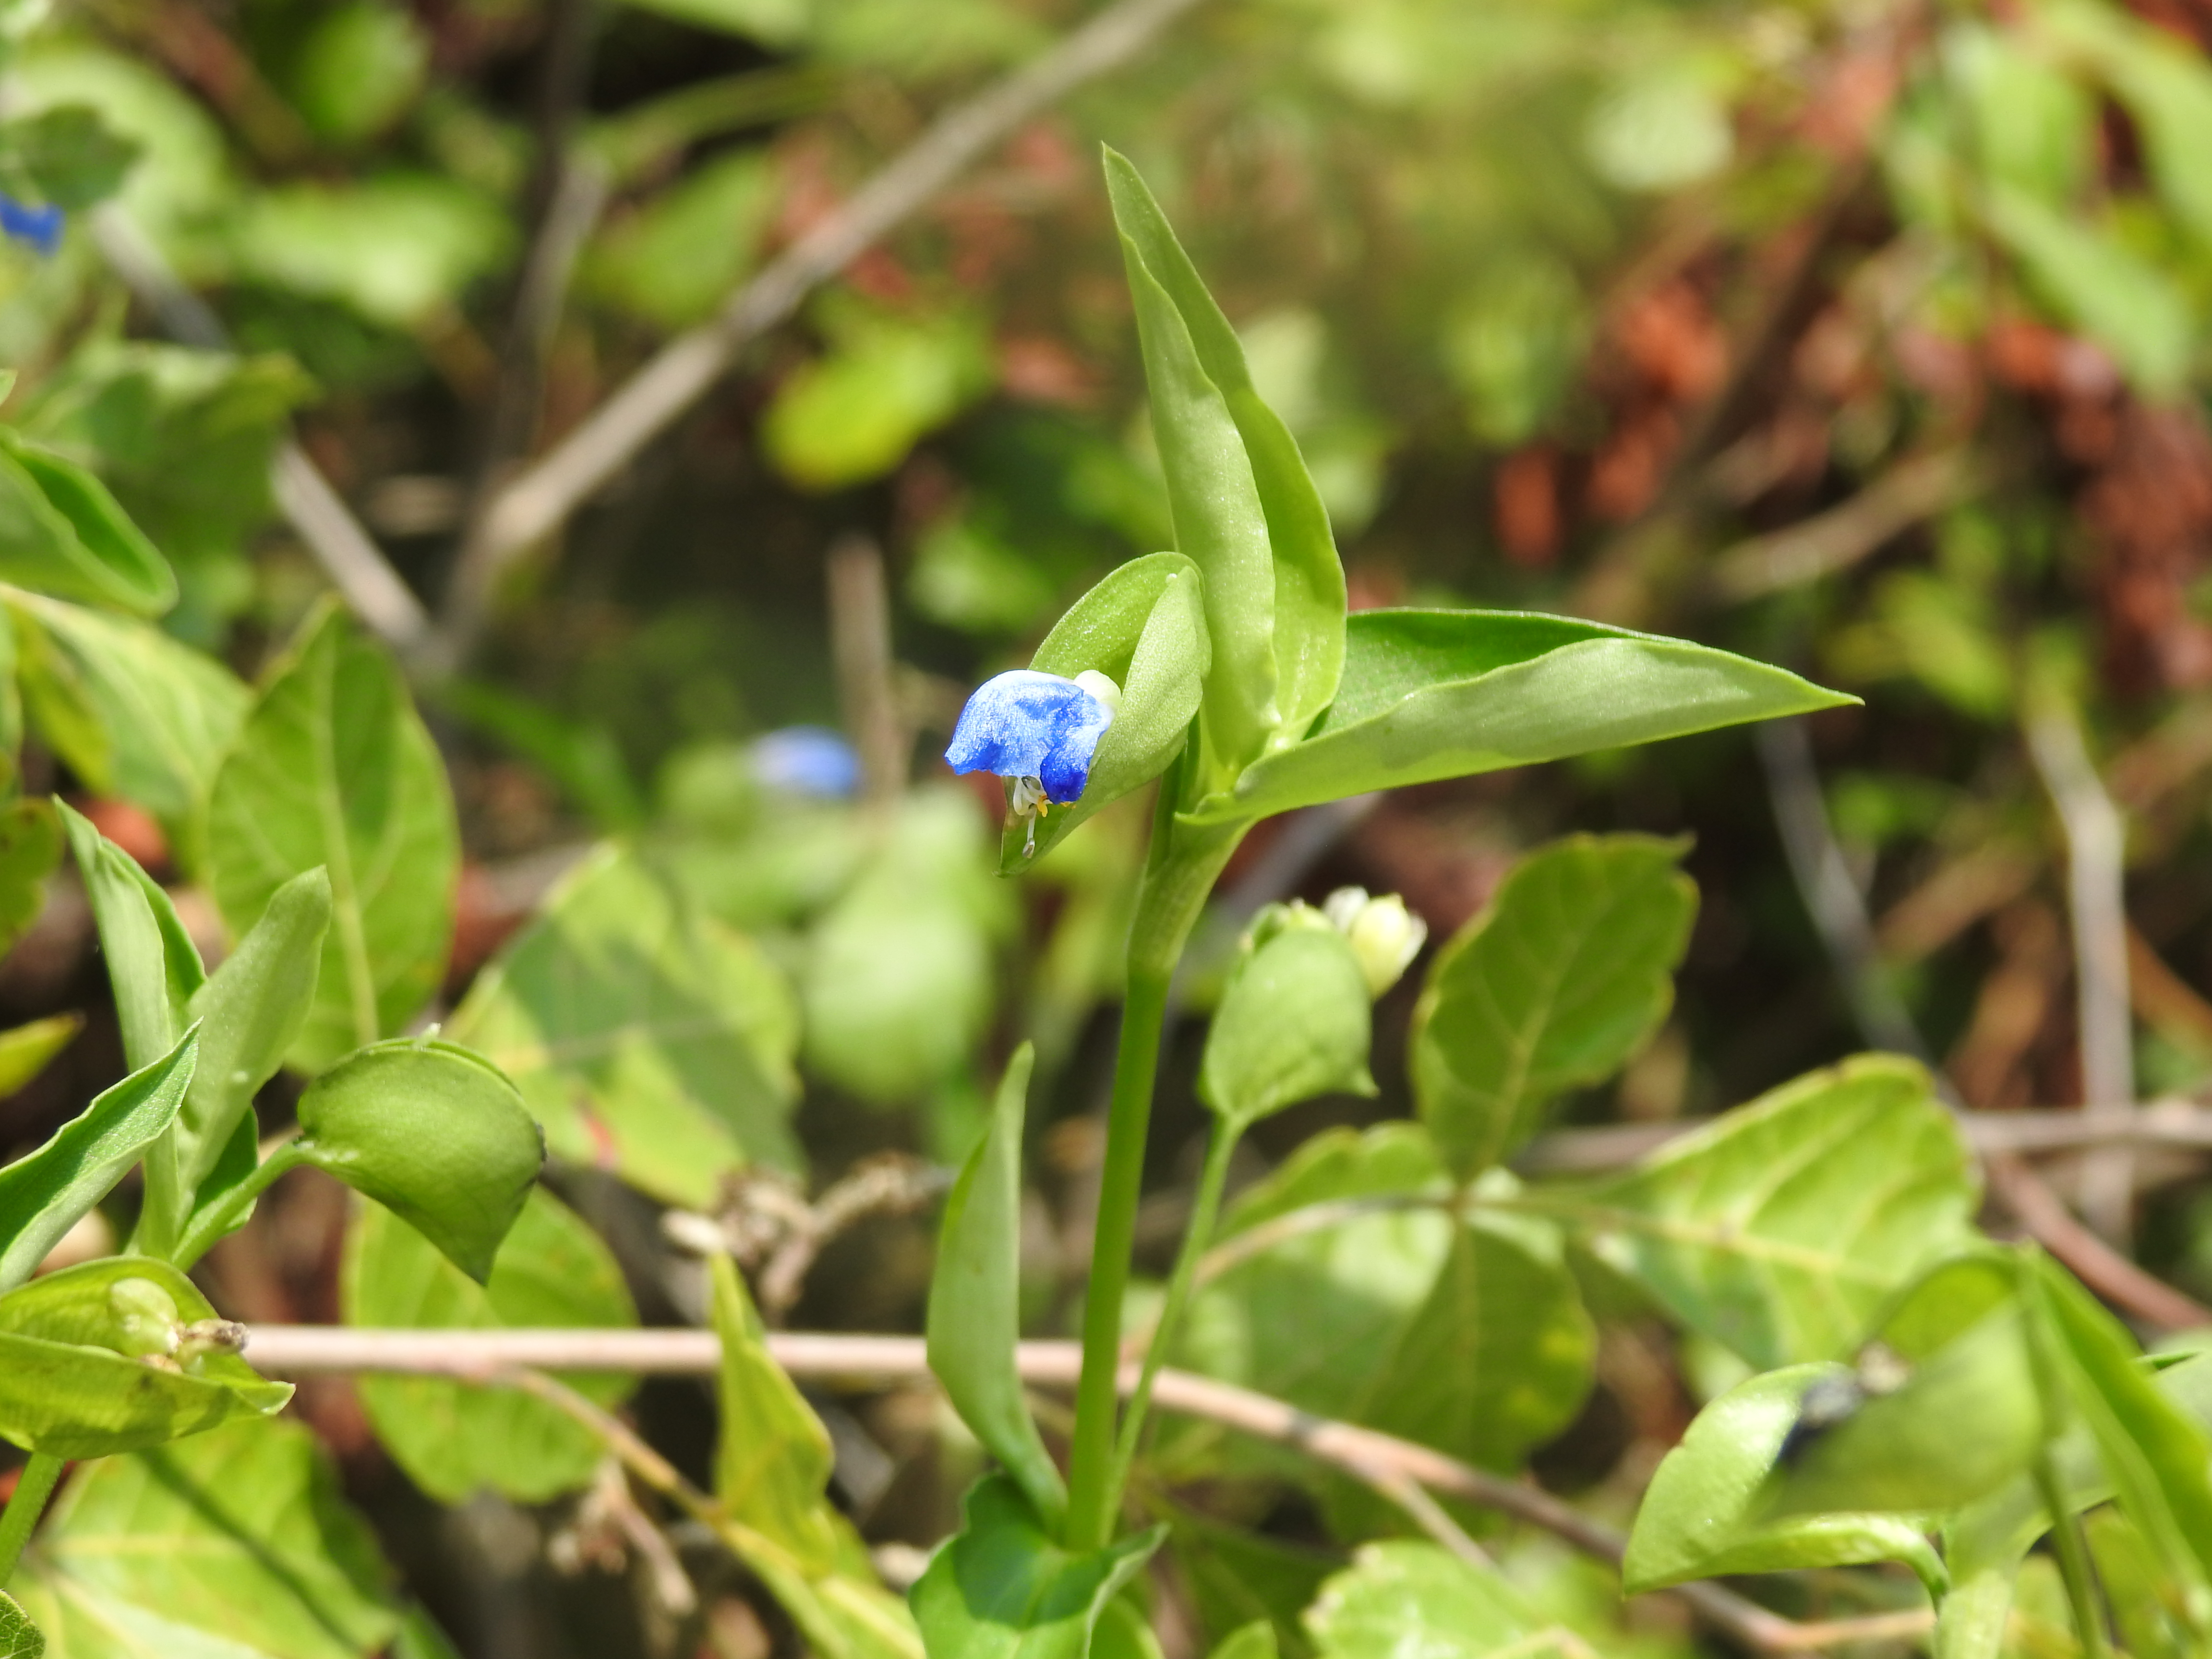 A closeup of a tiny blue flower bud